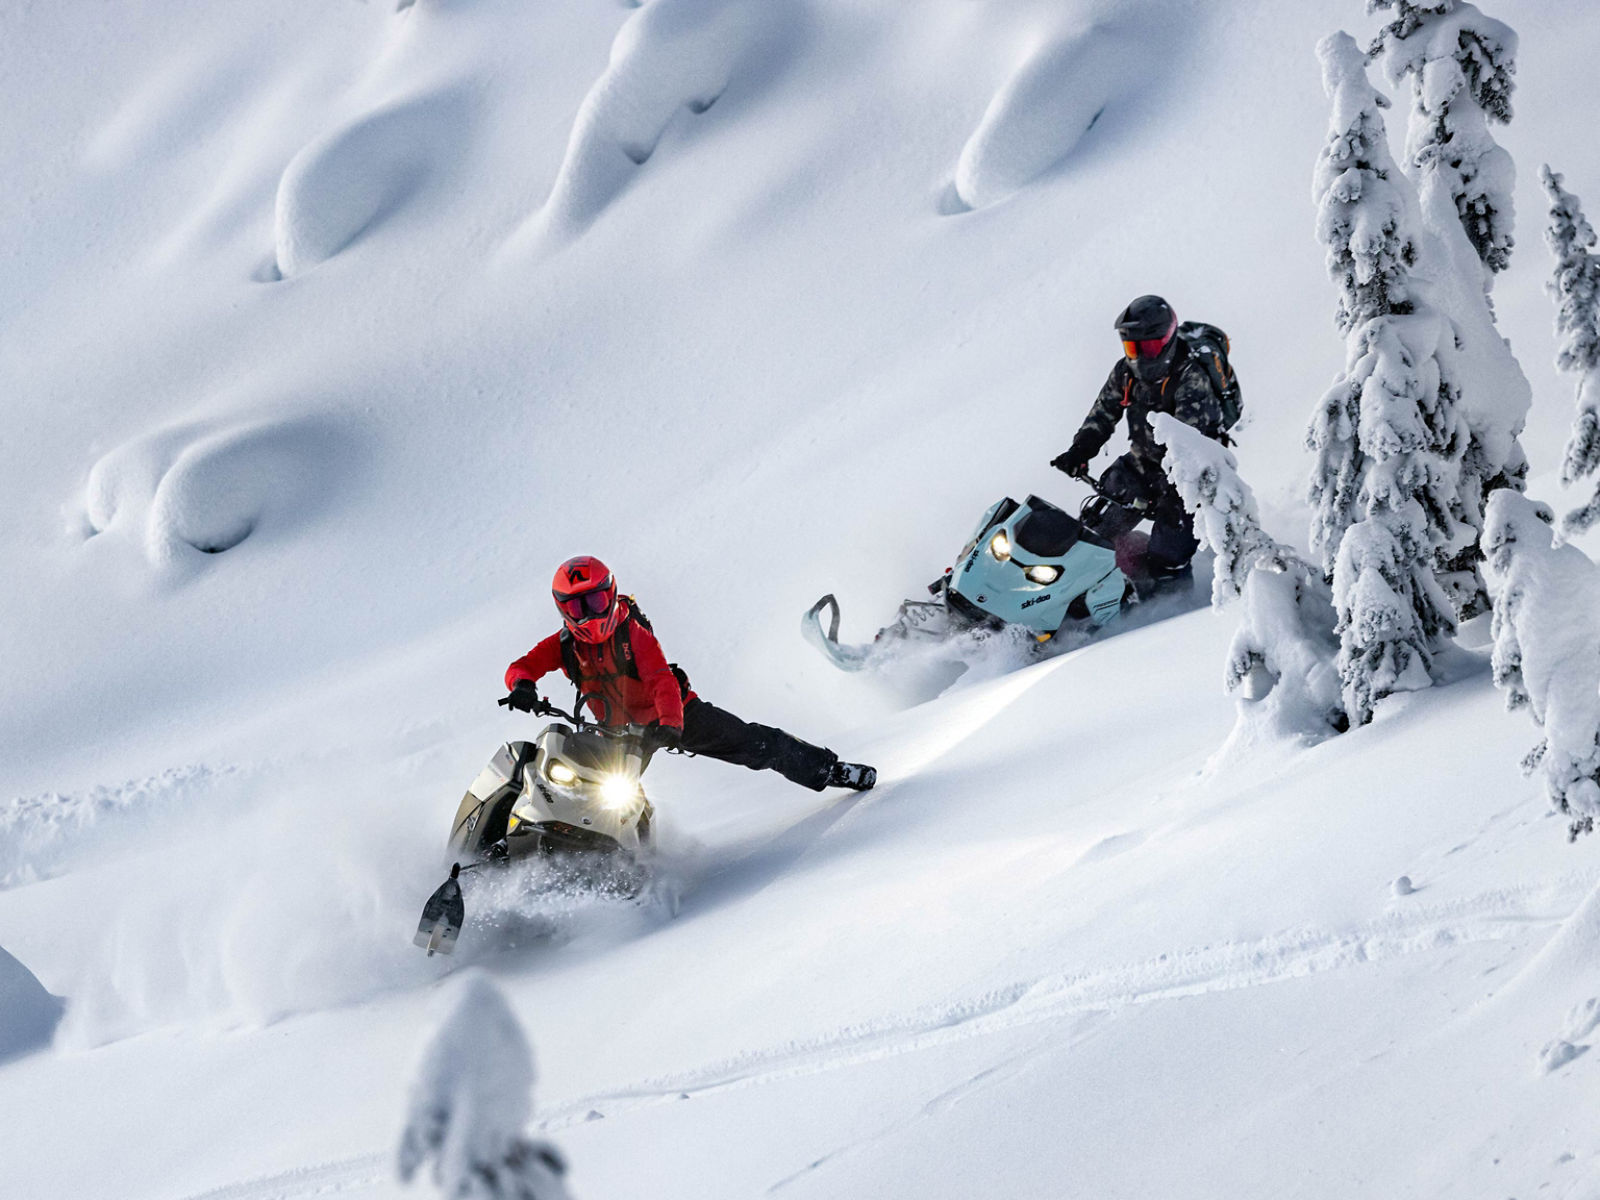 Ski-Doo Snowmobiles